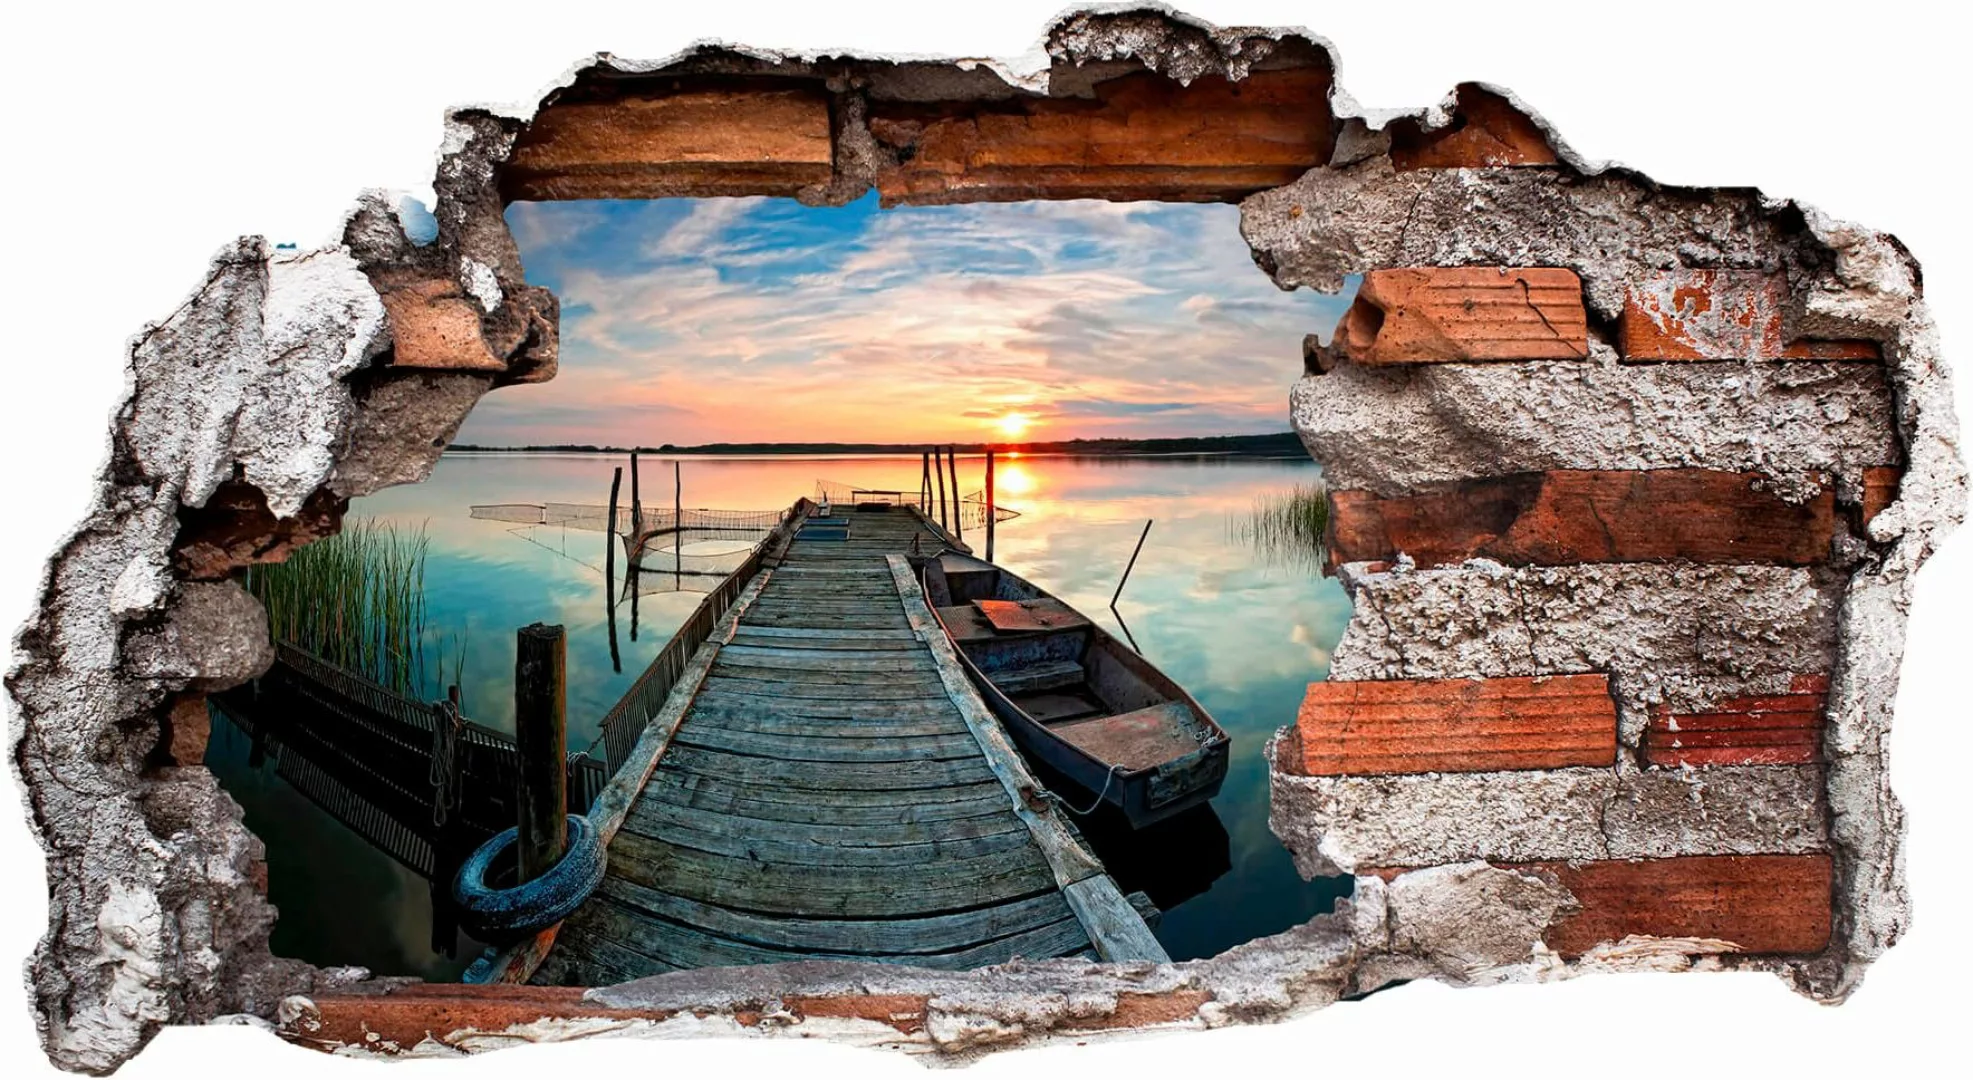 Wall-Art Wandtattoo "Sunset at the lake", selbstklebend, entfernbar günstig online kaufen